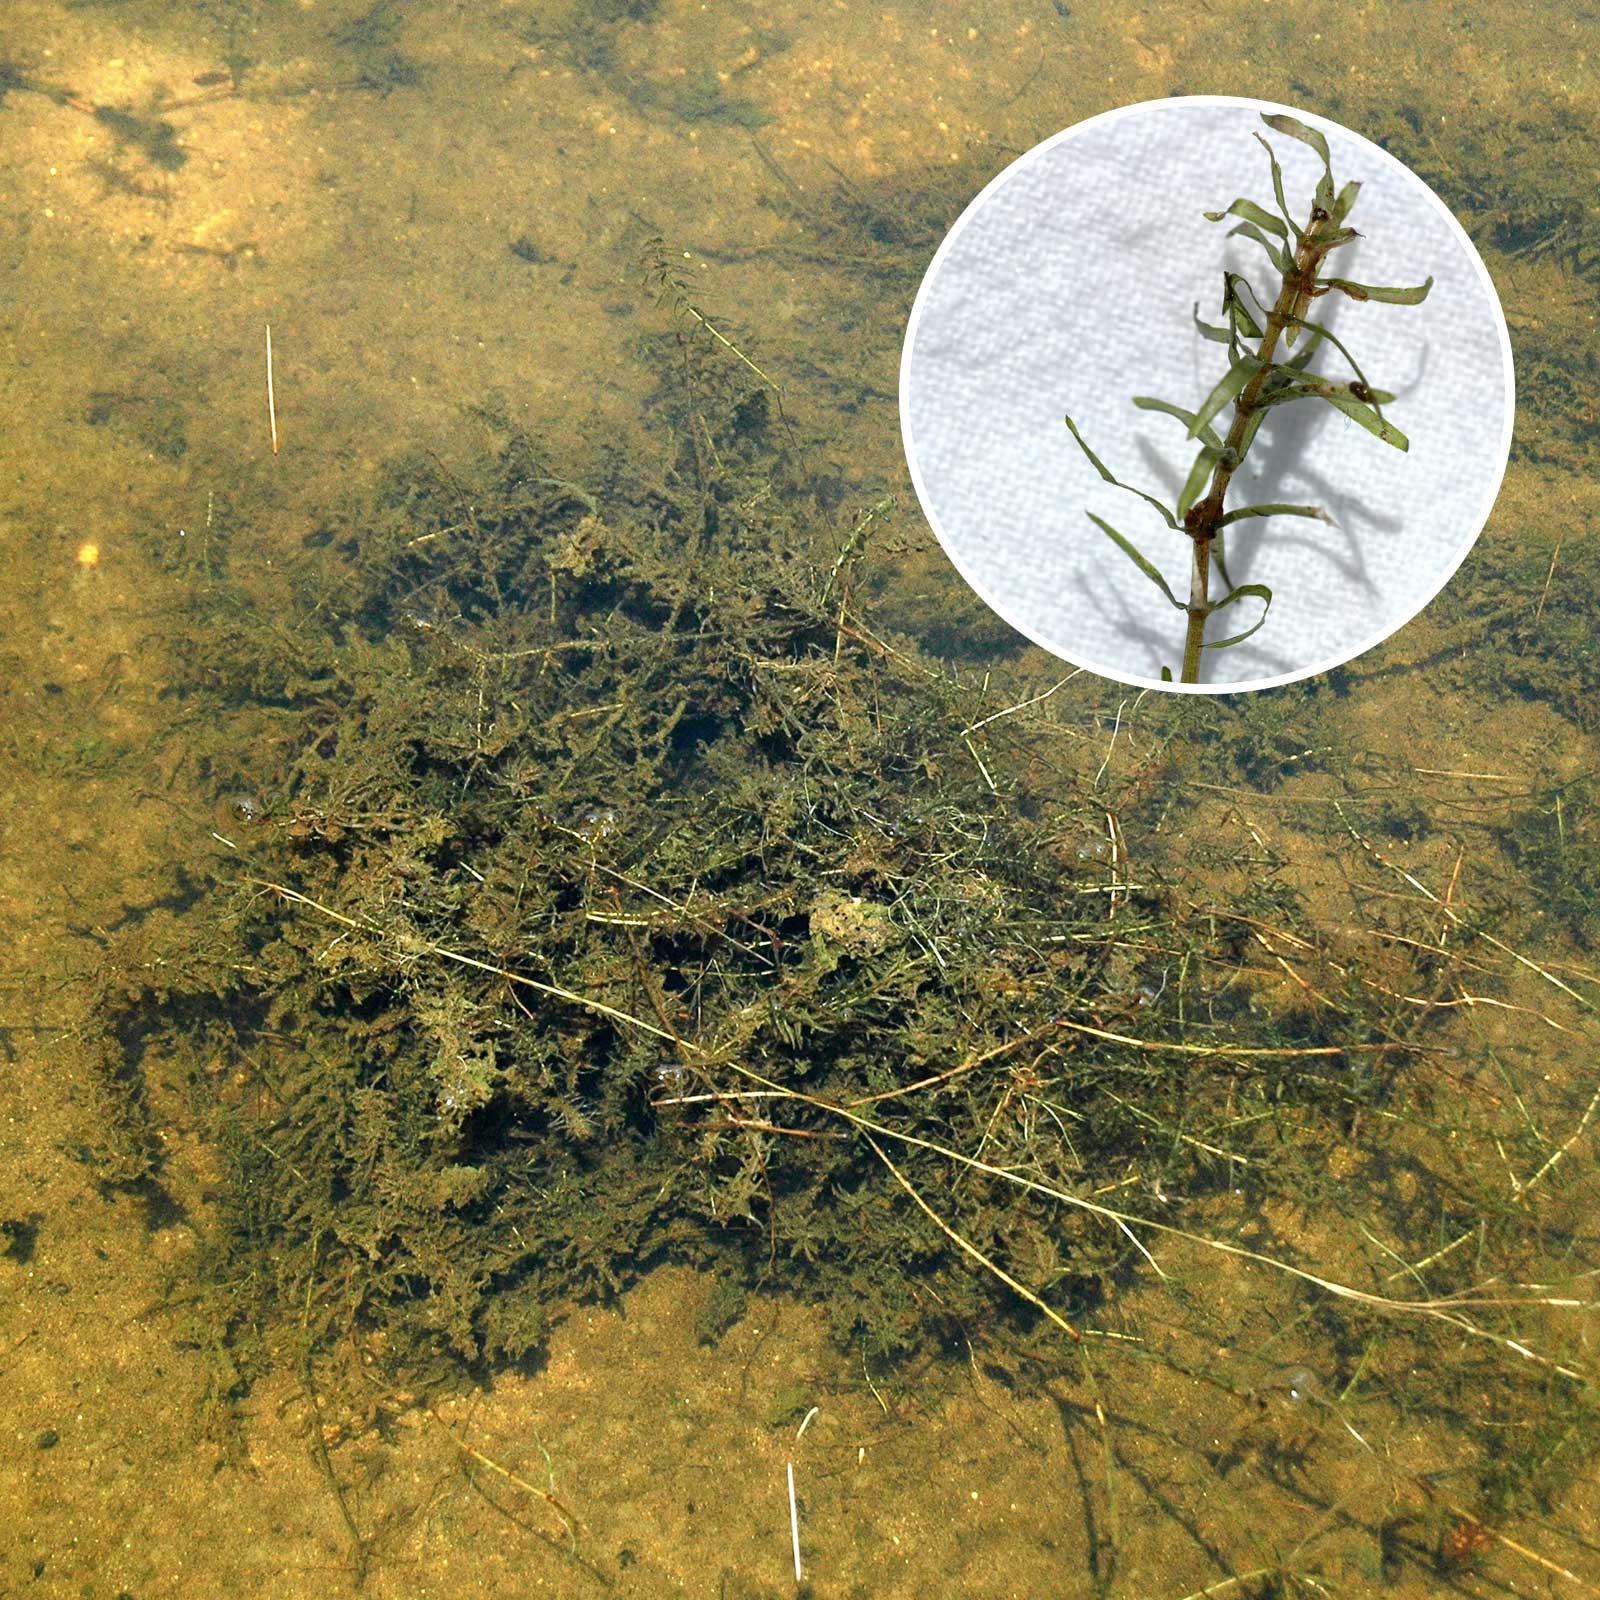 Eloda submerged Aquatic Vegetation